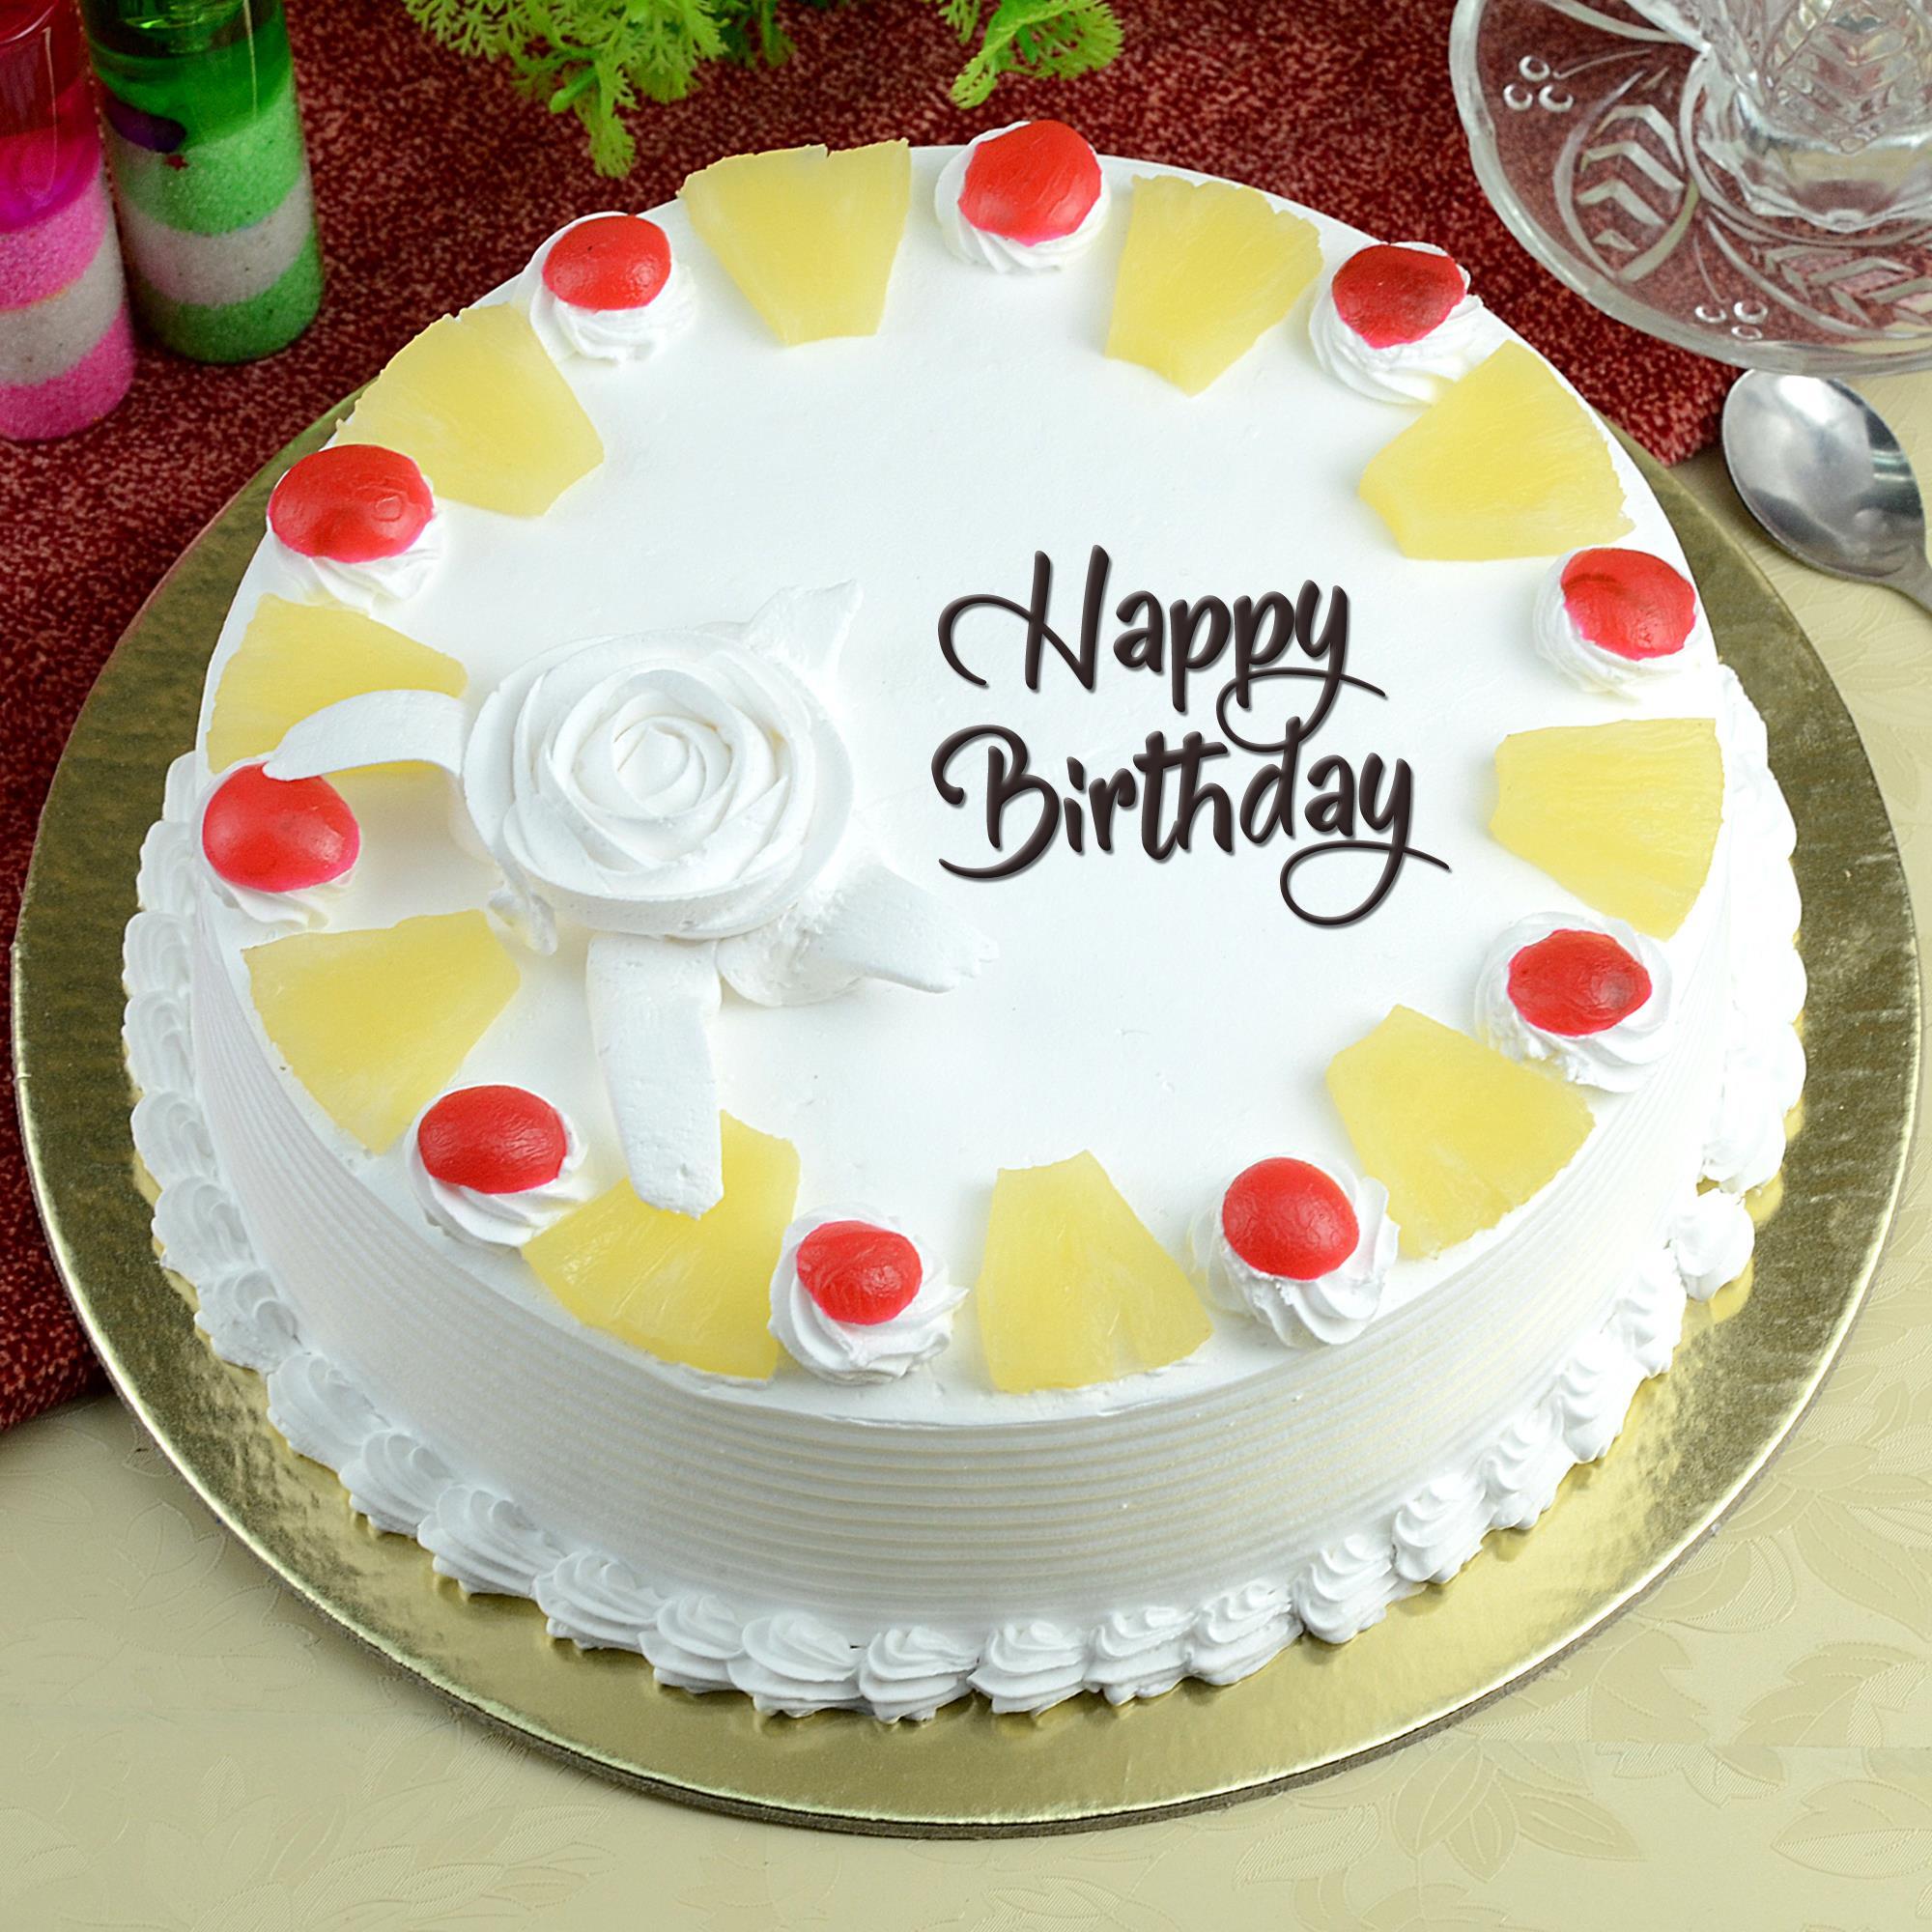 Buy/Send Pineapple Cake 1Kg Online- FNP